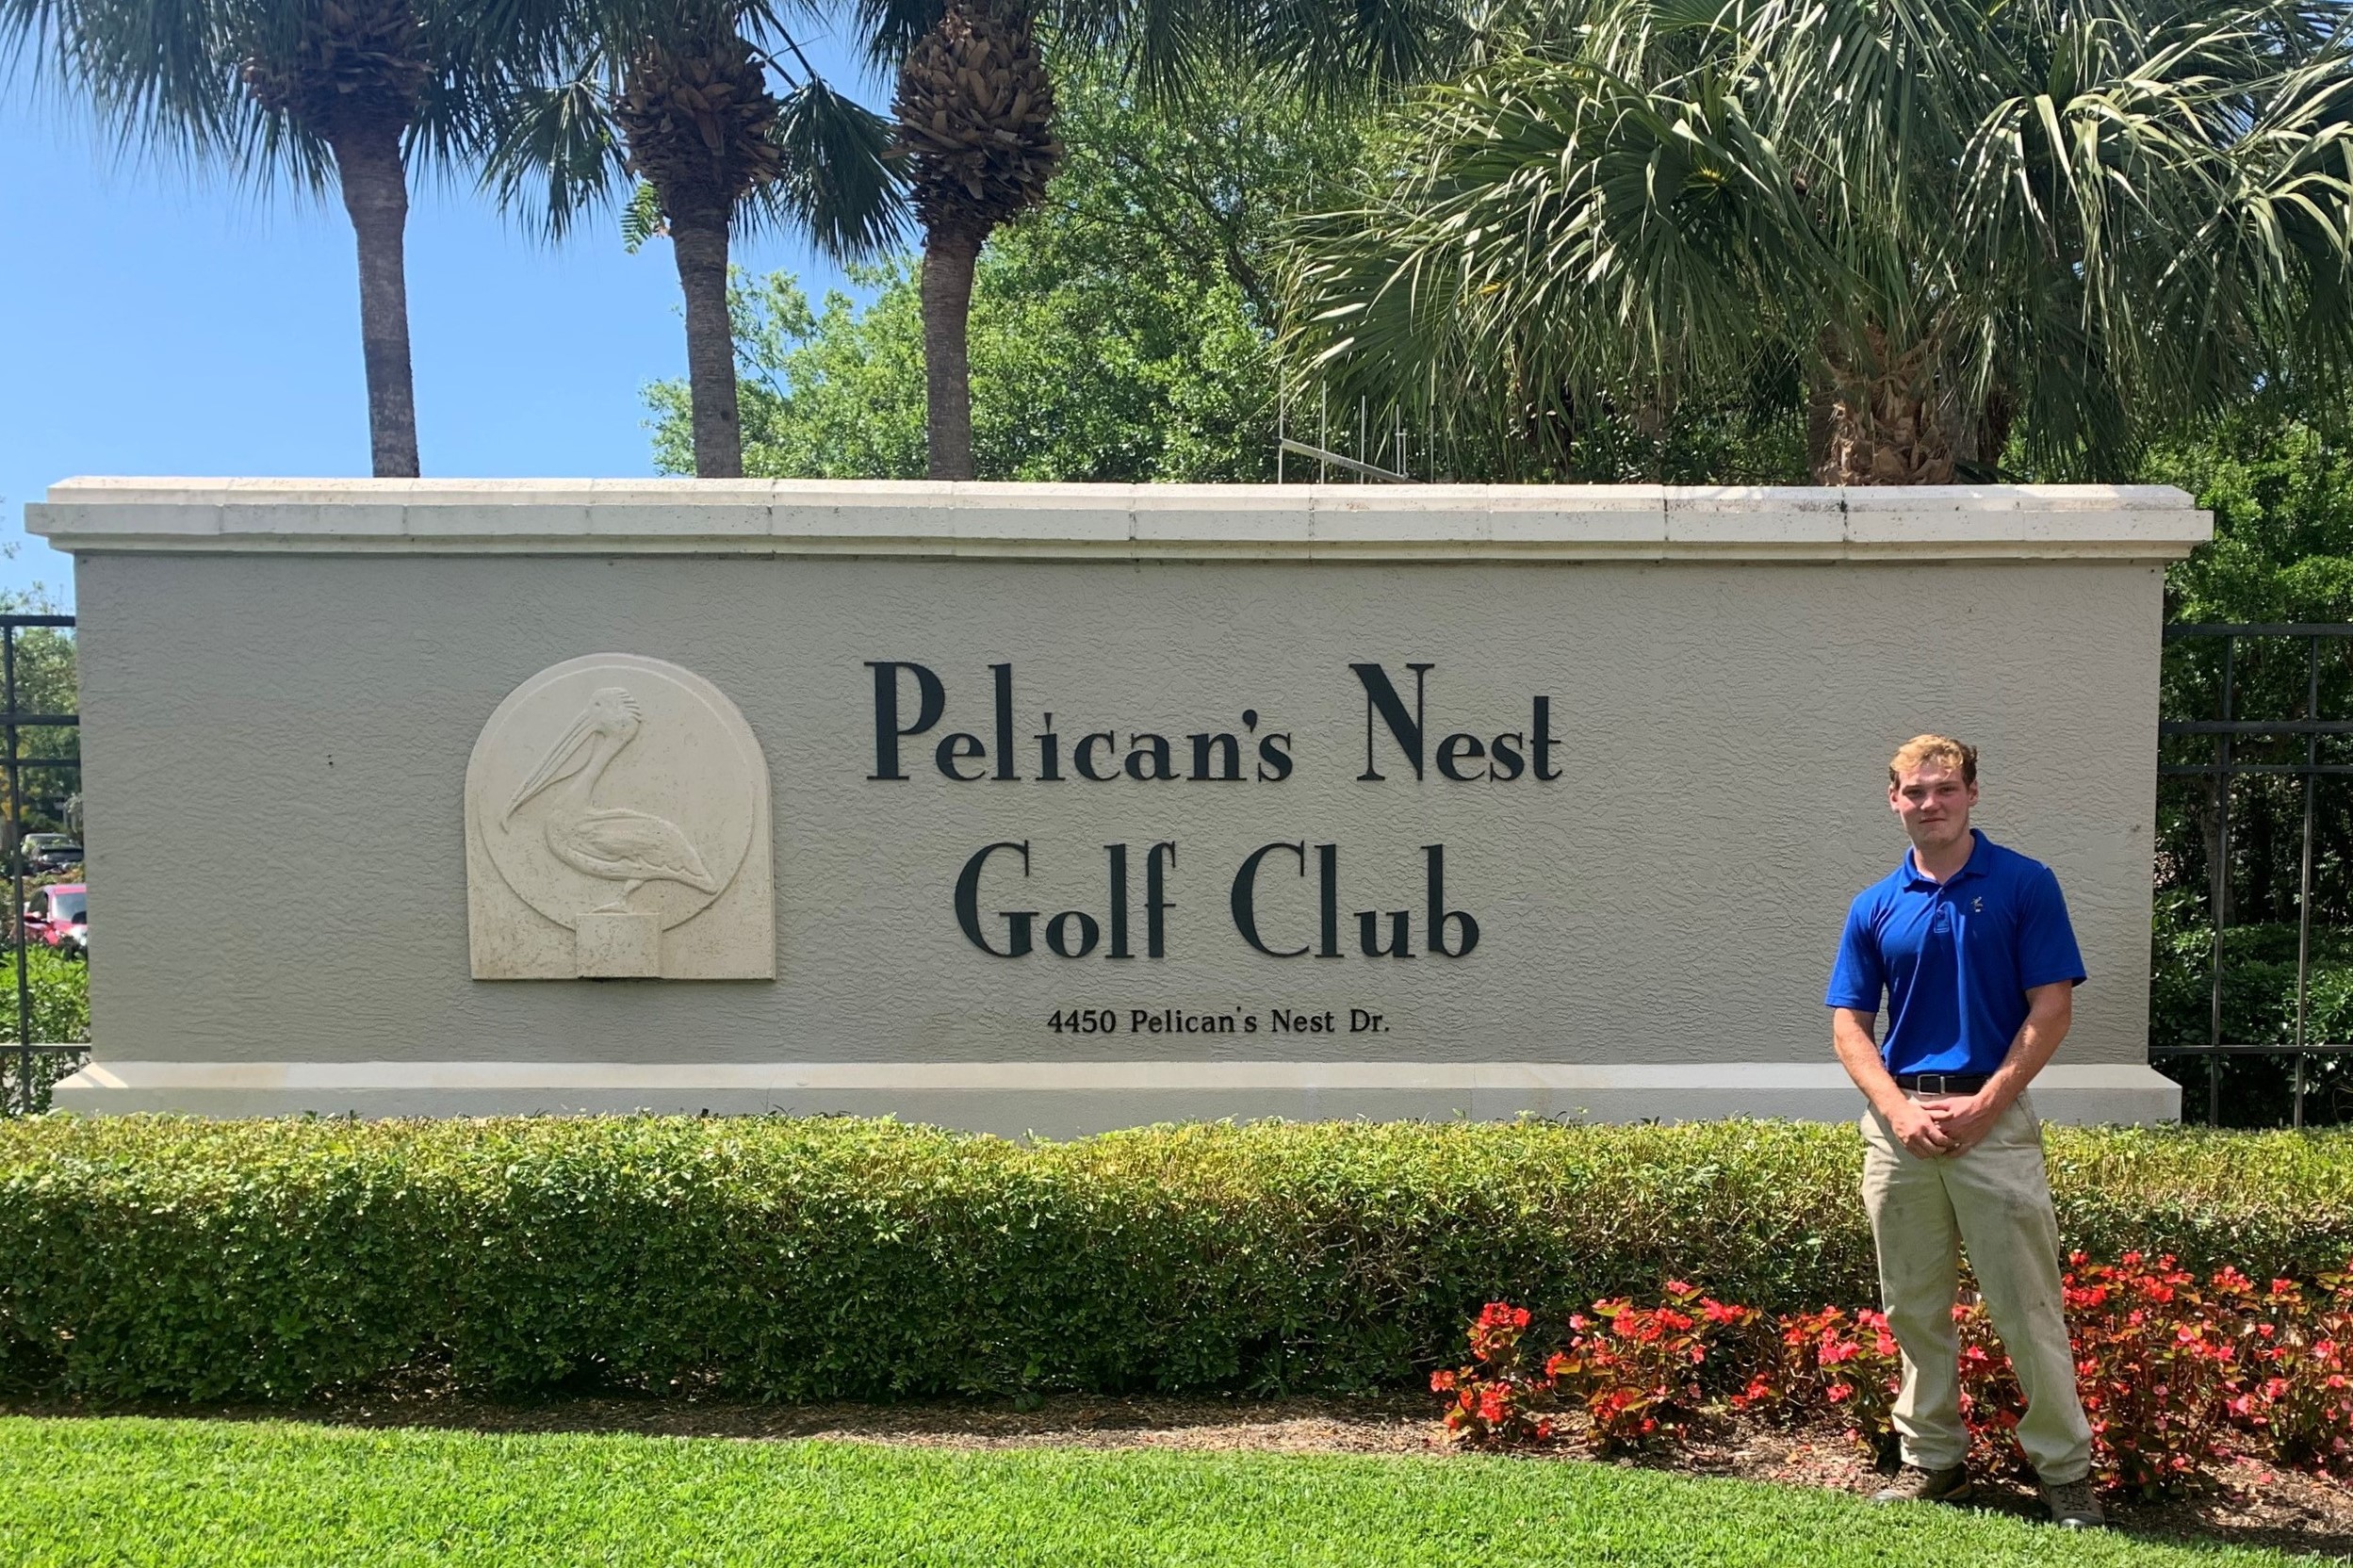 Jackson-Severns-Pelicans-Nest-Golf-Club-sign-crop